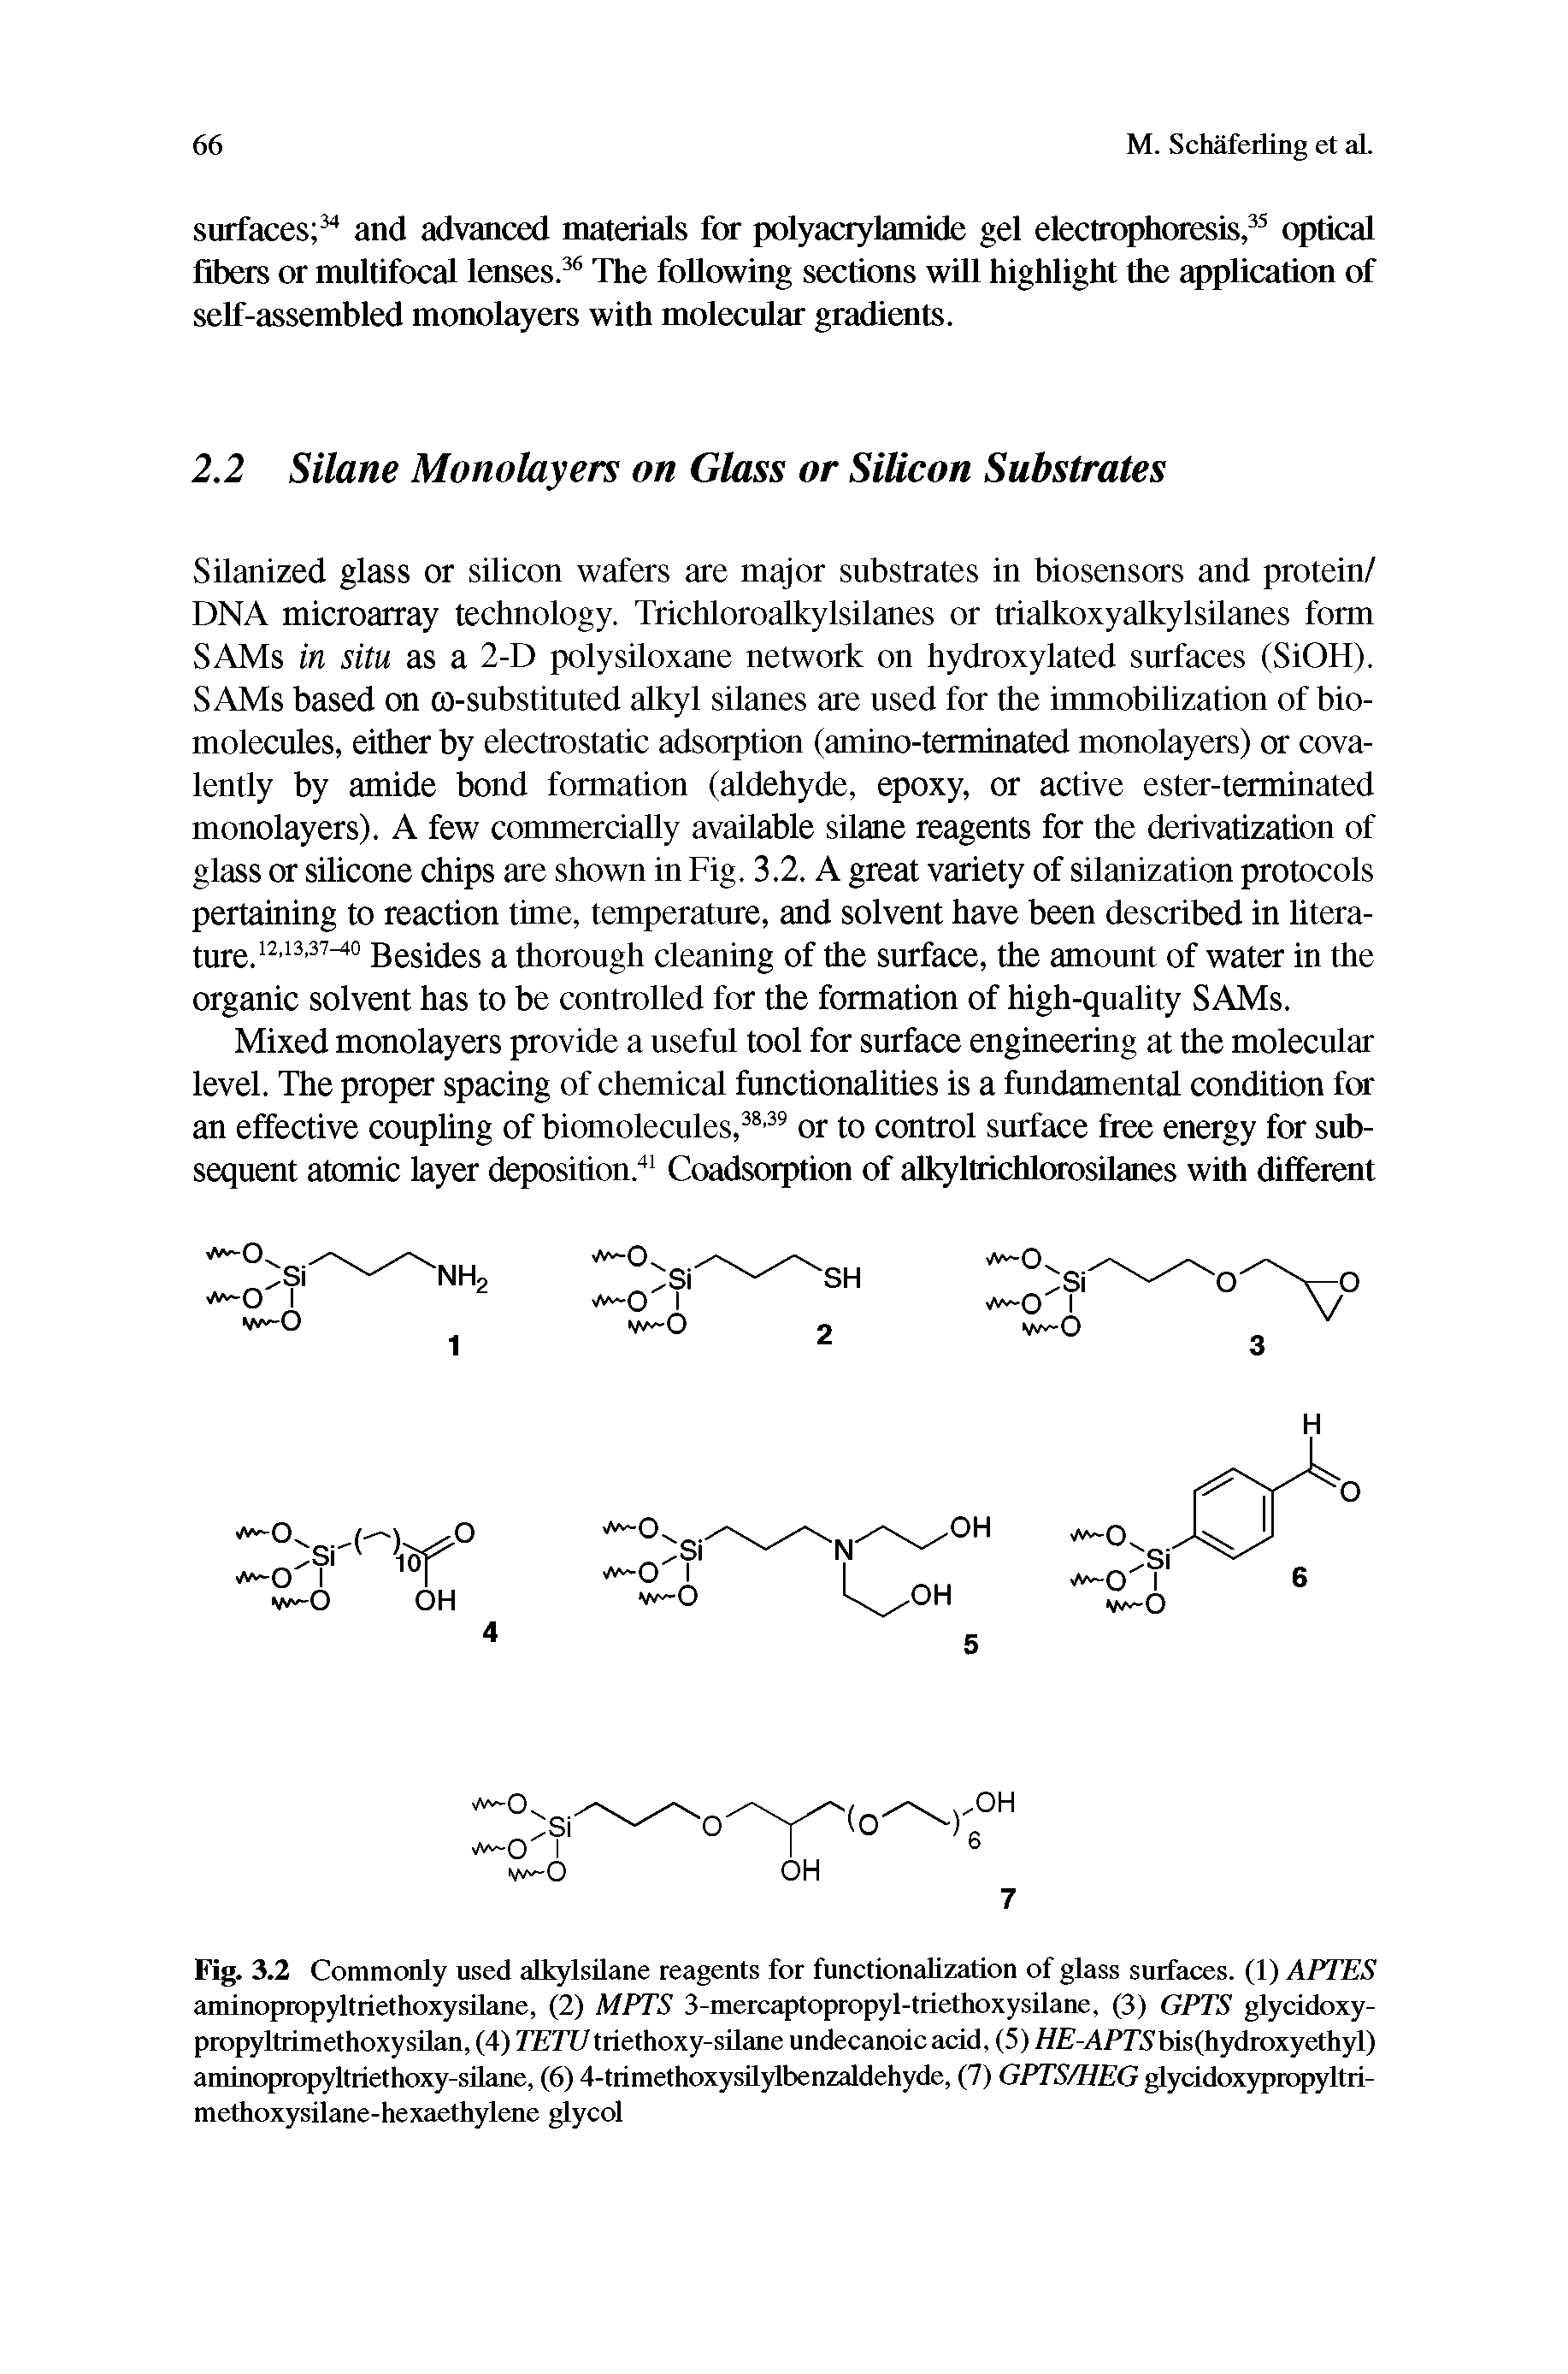 Fig. 3.2 Commonly used alkylsilane reagents for functionalization of glass surfaces. (1) APTES aminopropyltriethoxysilane, (2) MPTS 3-mercaptopropyl-triethoxysilane, (3) GPTS glycidoxy-propyltrimethoxysilan, (4) TETU triethoxy-silane undecanoic acid, (5) HE-APTS b i s ( h yd mx y ct h y I) aminopropyltriethoxy-silane, (6) 4-trimethoxysilylbenzaldehyde, (7) GPTS/HEG glyddoxypropyltri-methoxysilane-hexaethylene glycol...